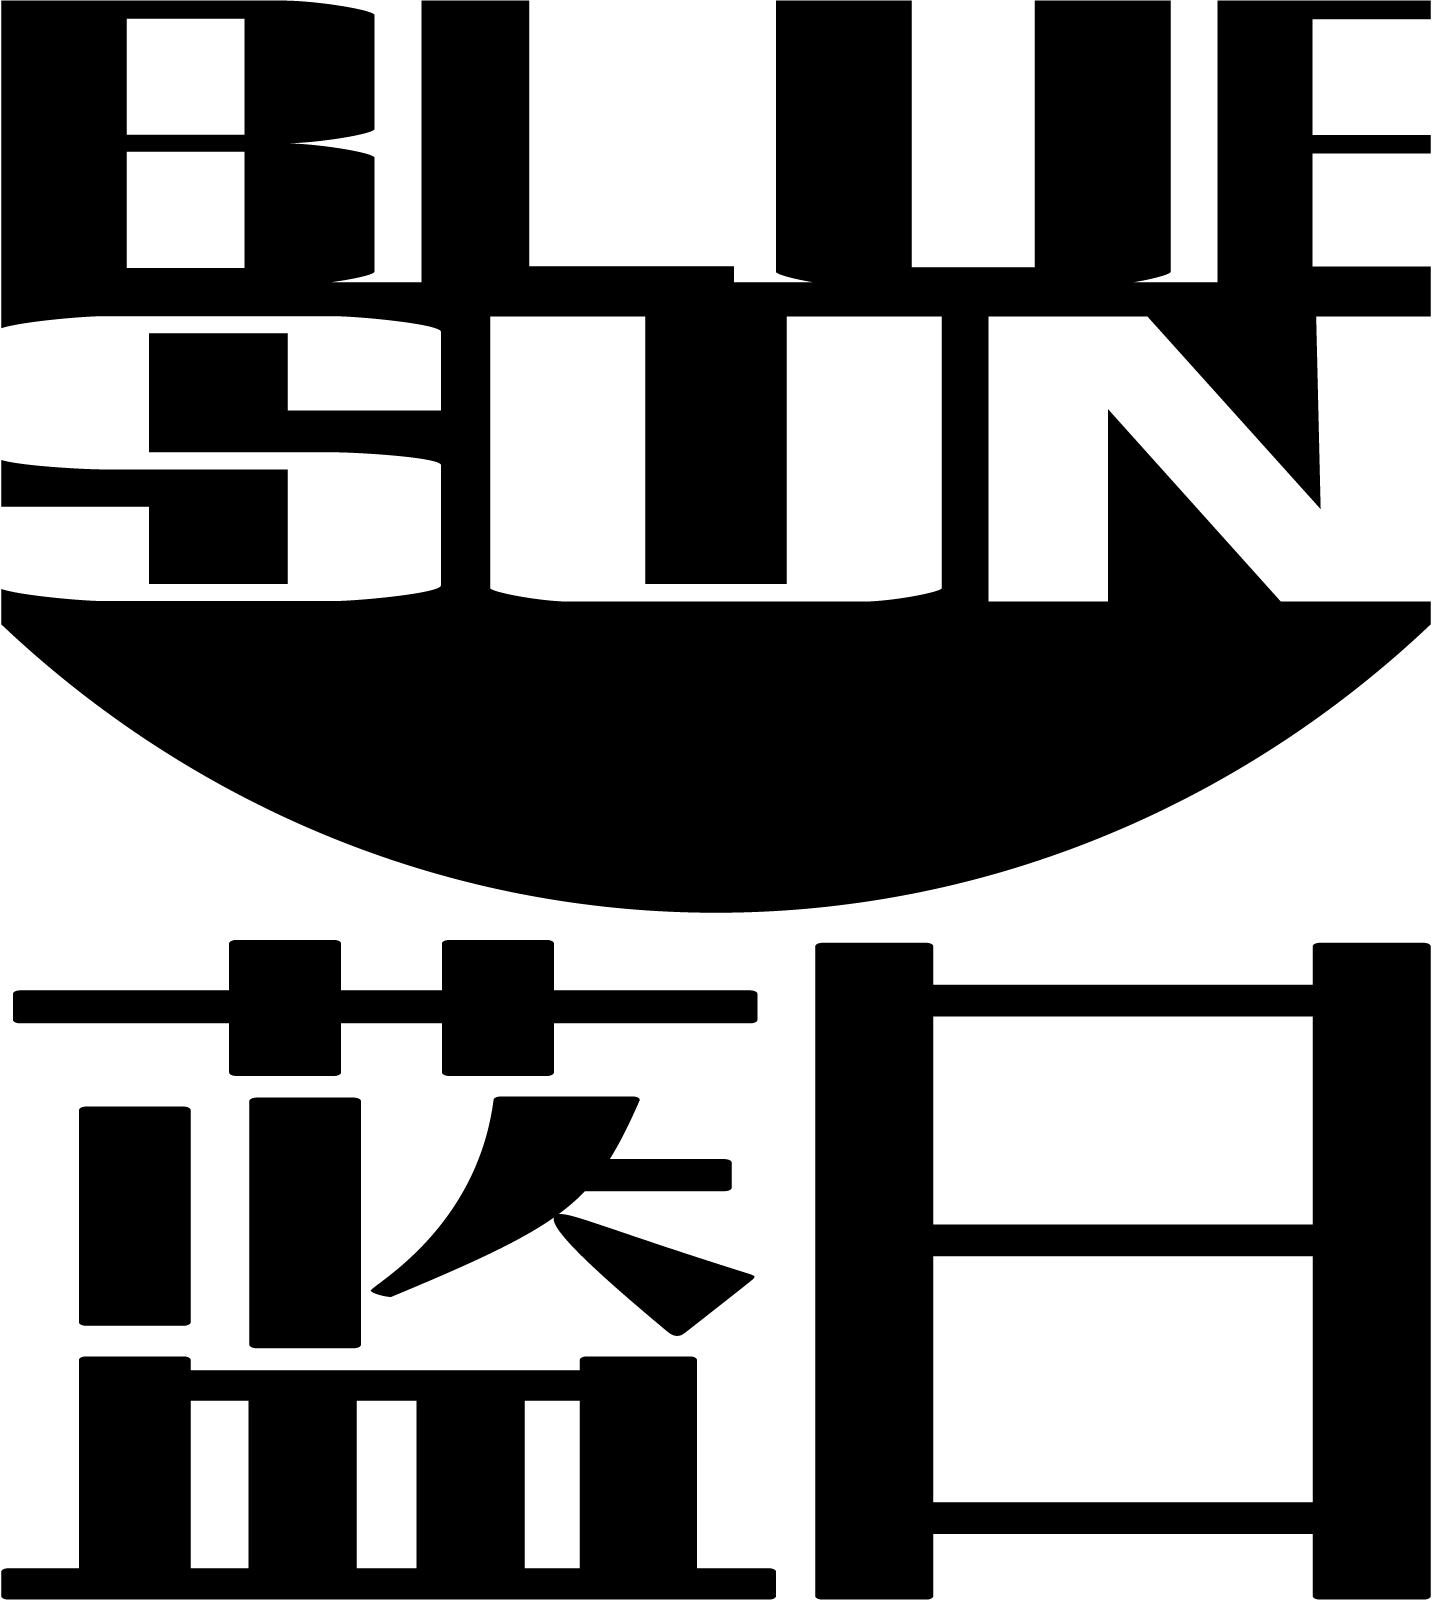 Blue Sun Logo - Image result for blue sun logo | Cricket | Firefly serenity ...